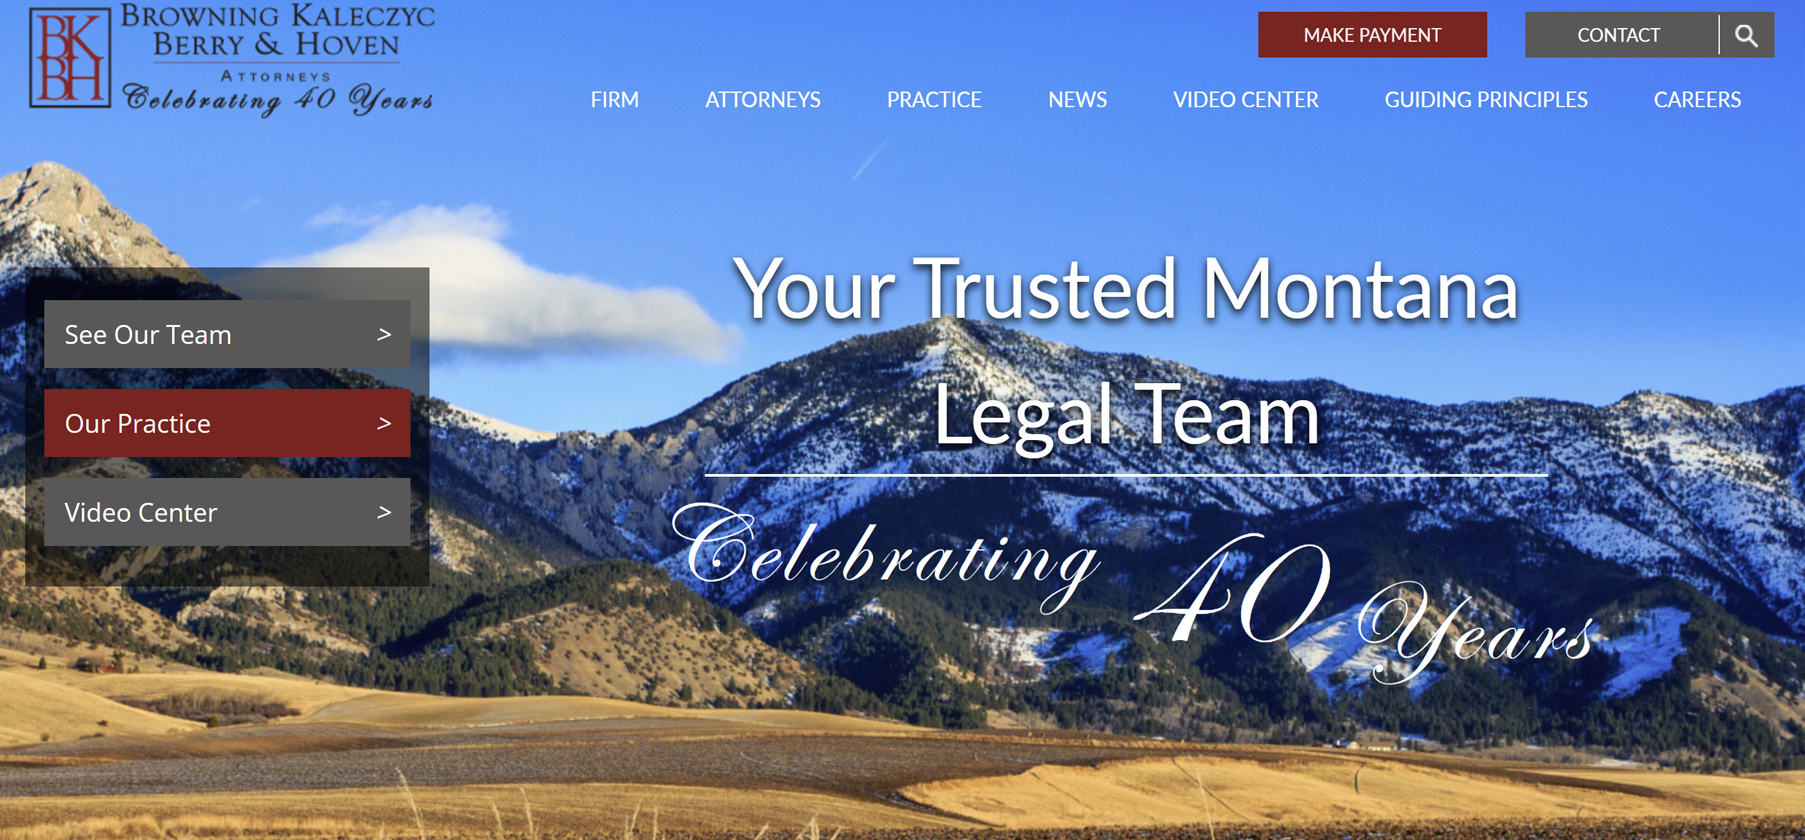 BKBH Montana Business Lawyers